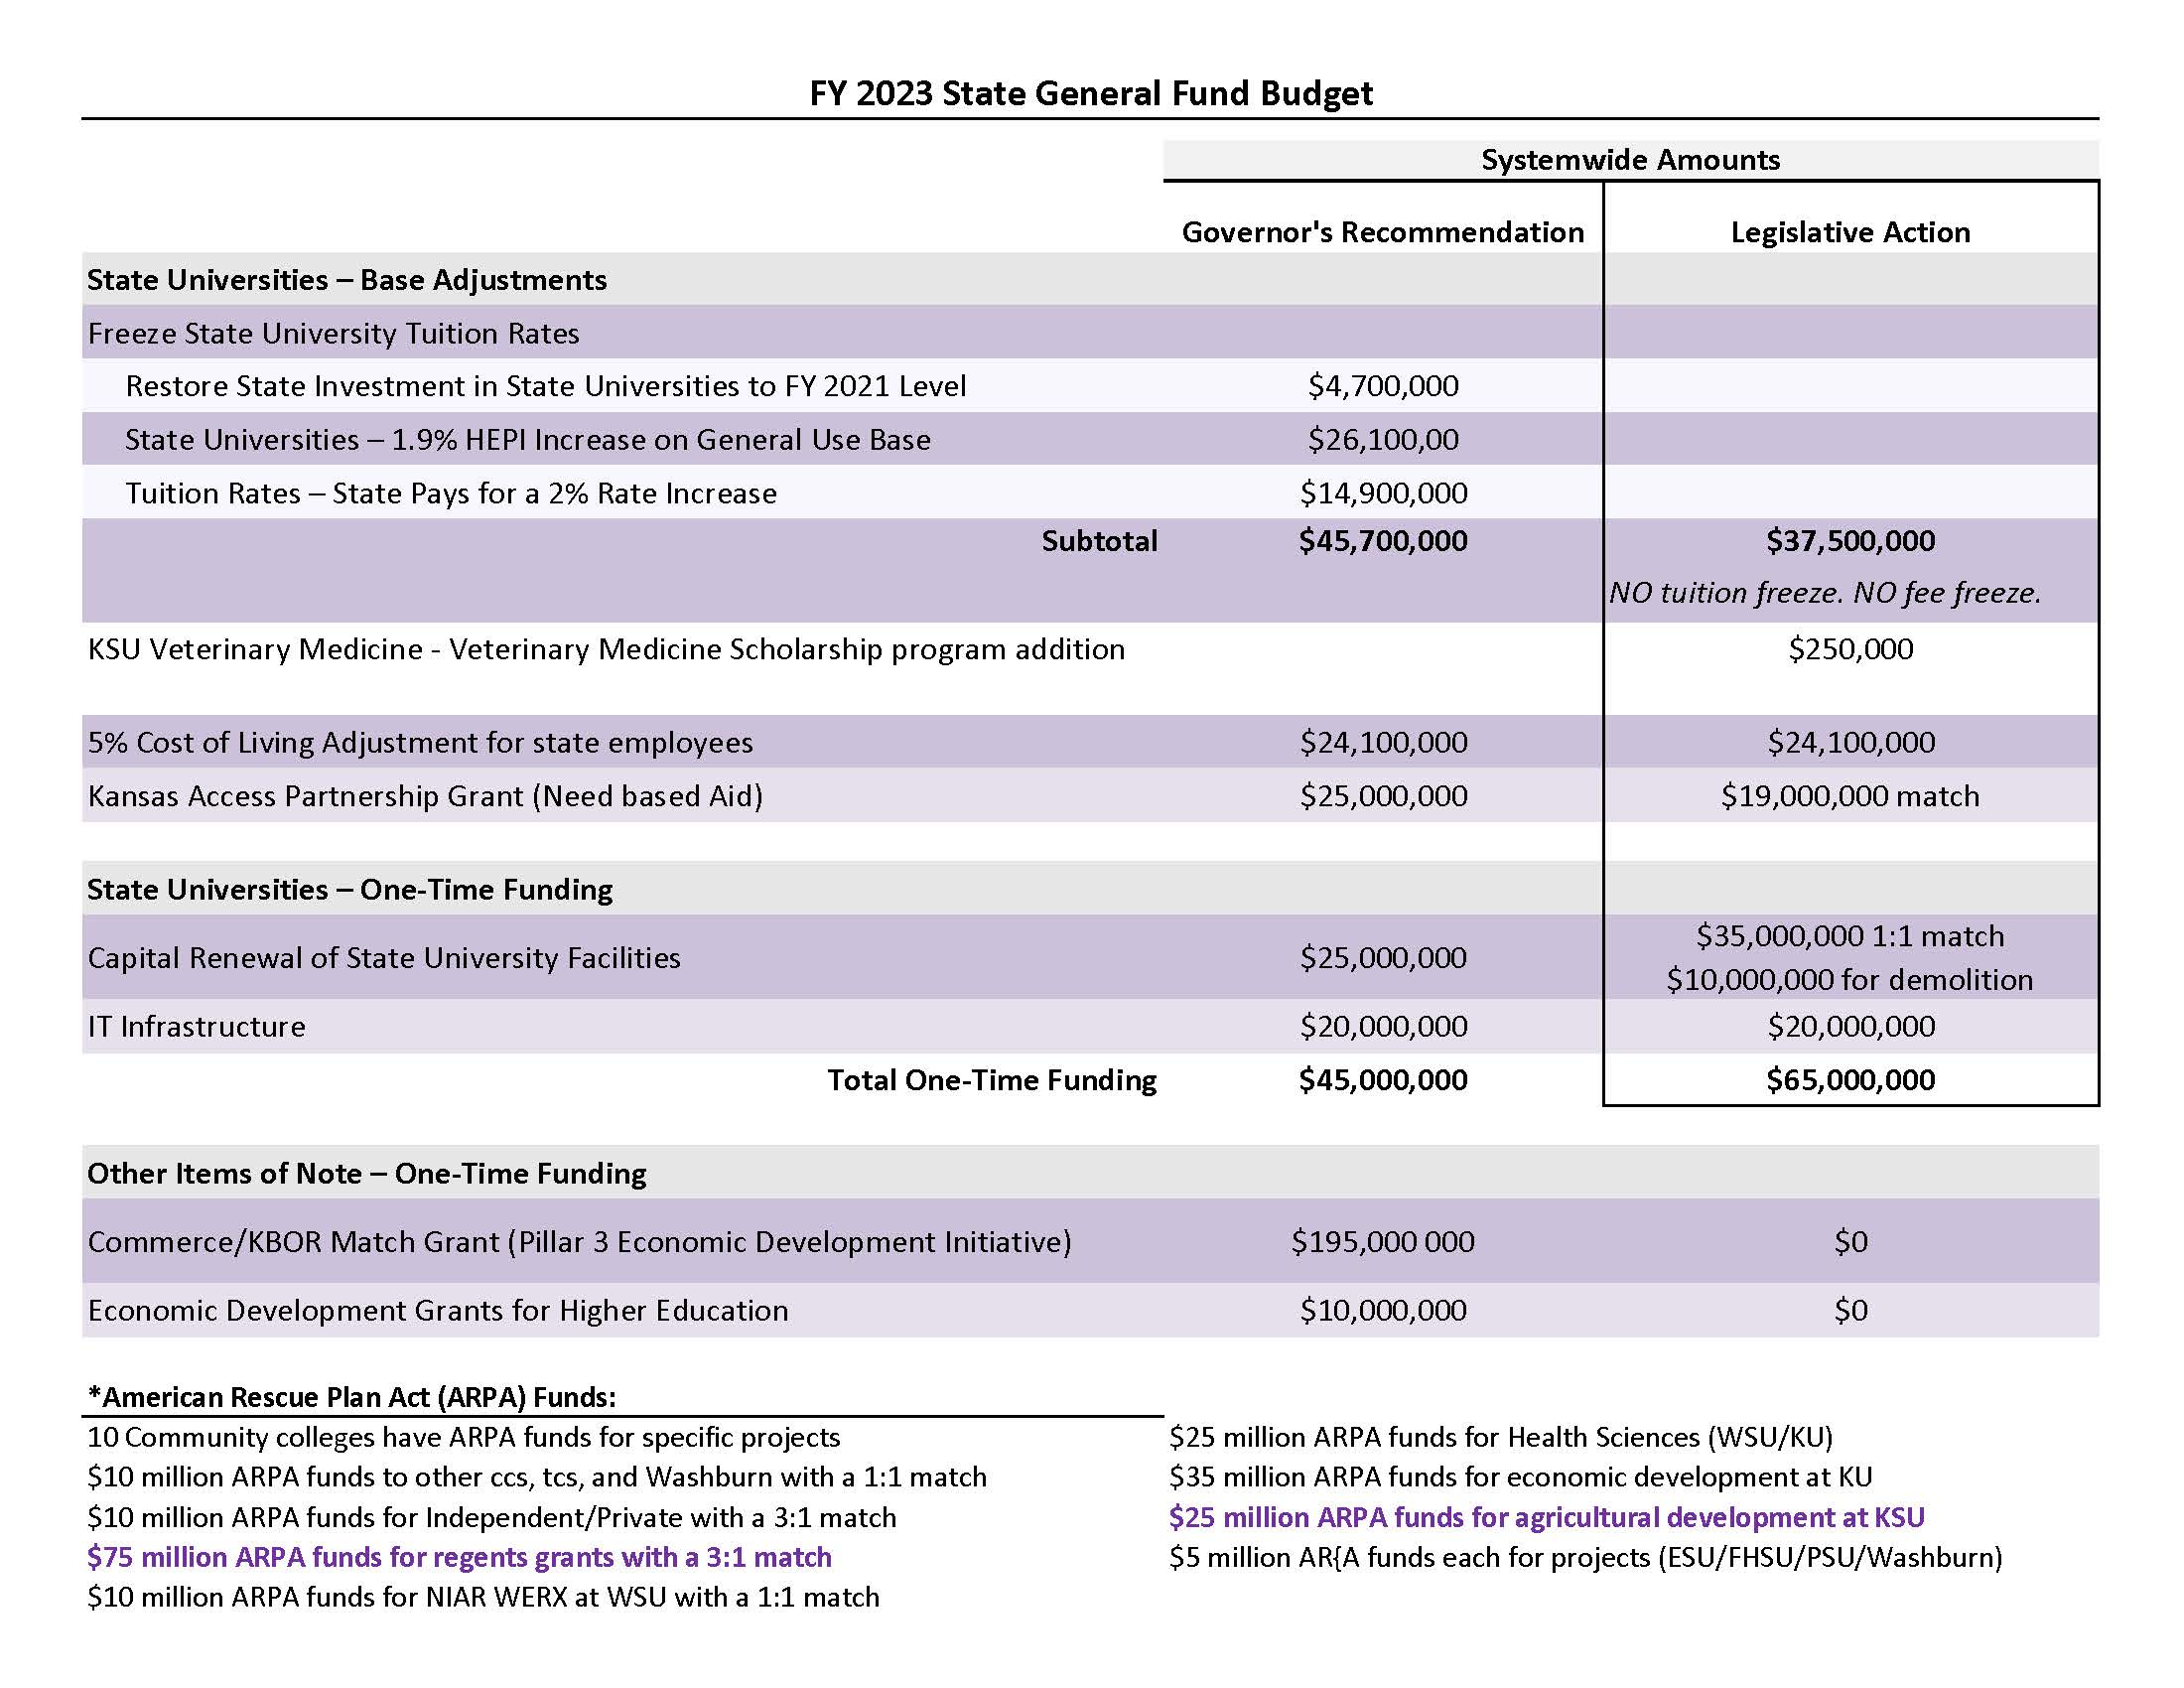 FY23 Budget Chart